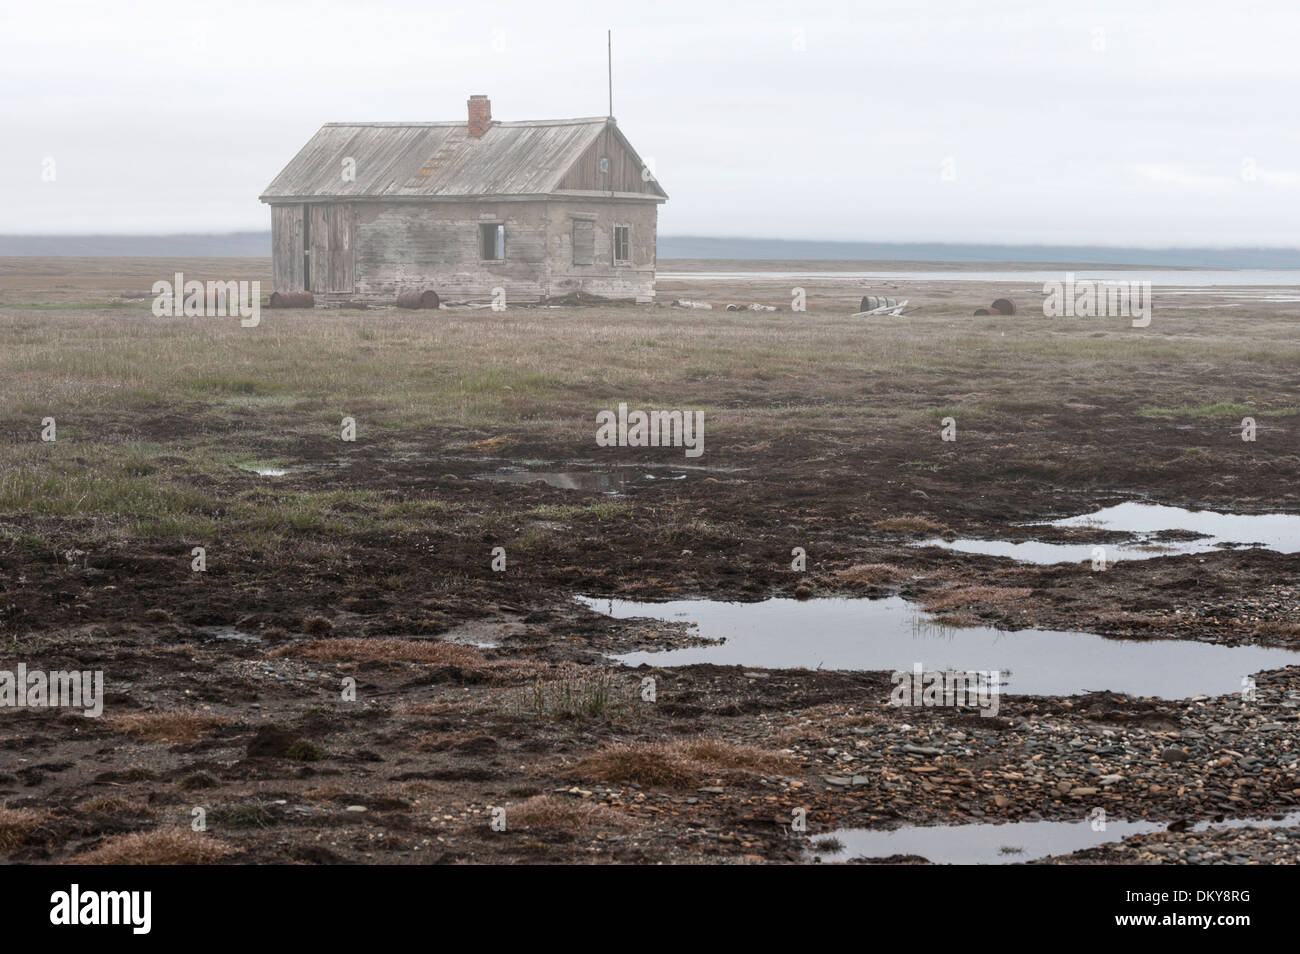 Abandoned house along Mammoth River, Wrangel Island, Russian Far East, Unesco World Heritage Site Stock Photo